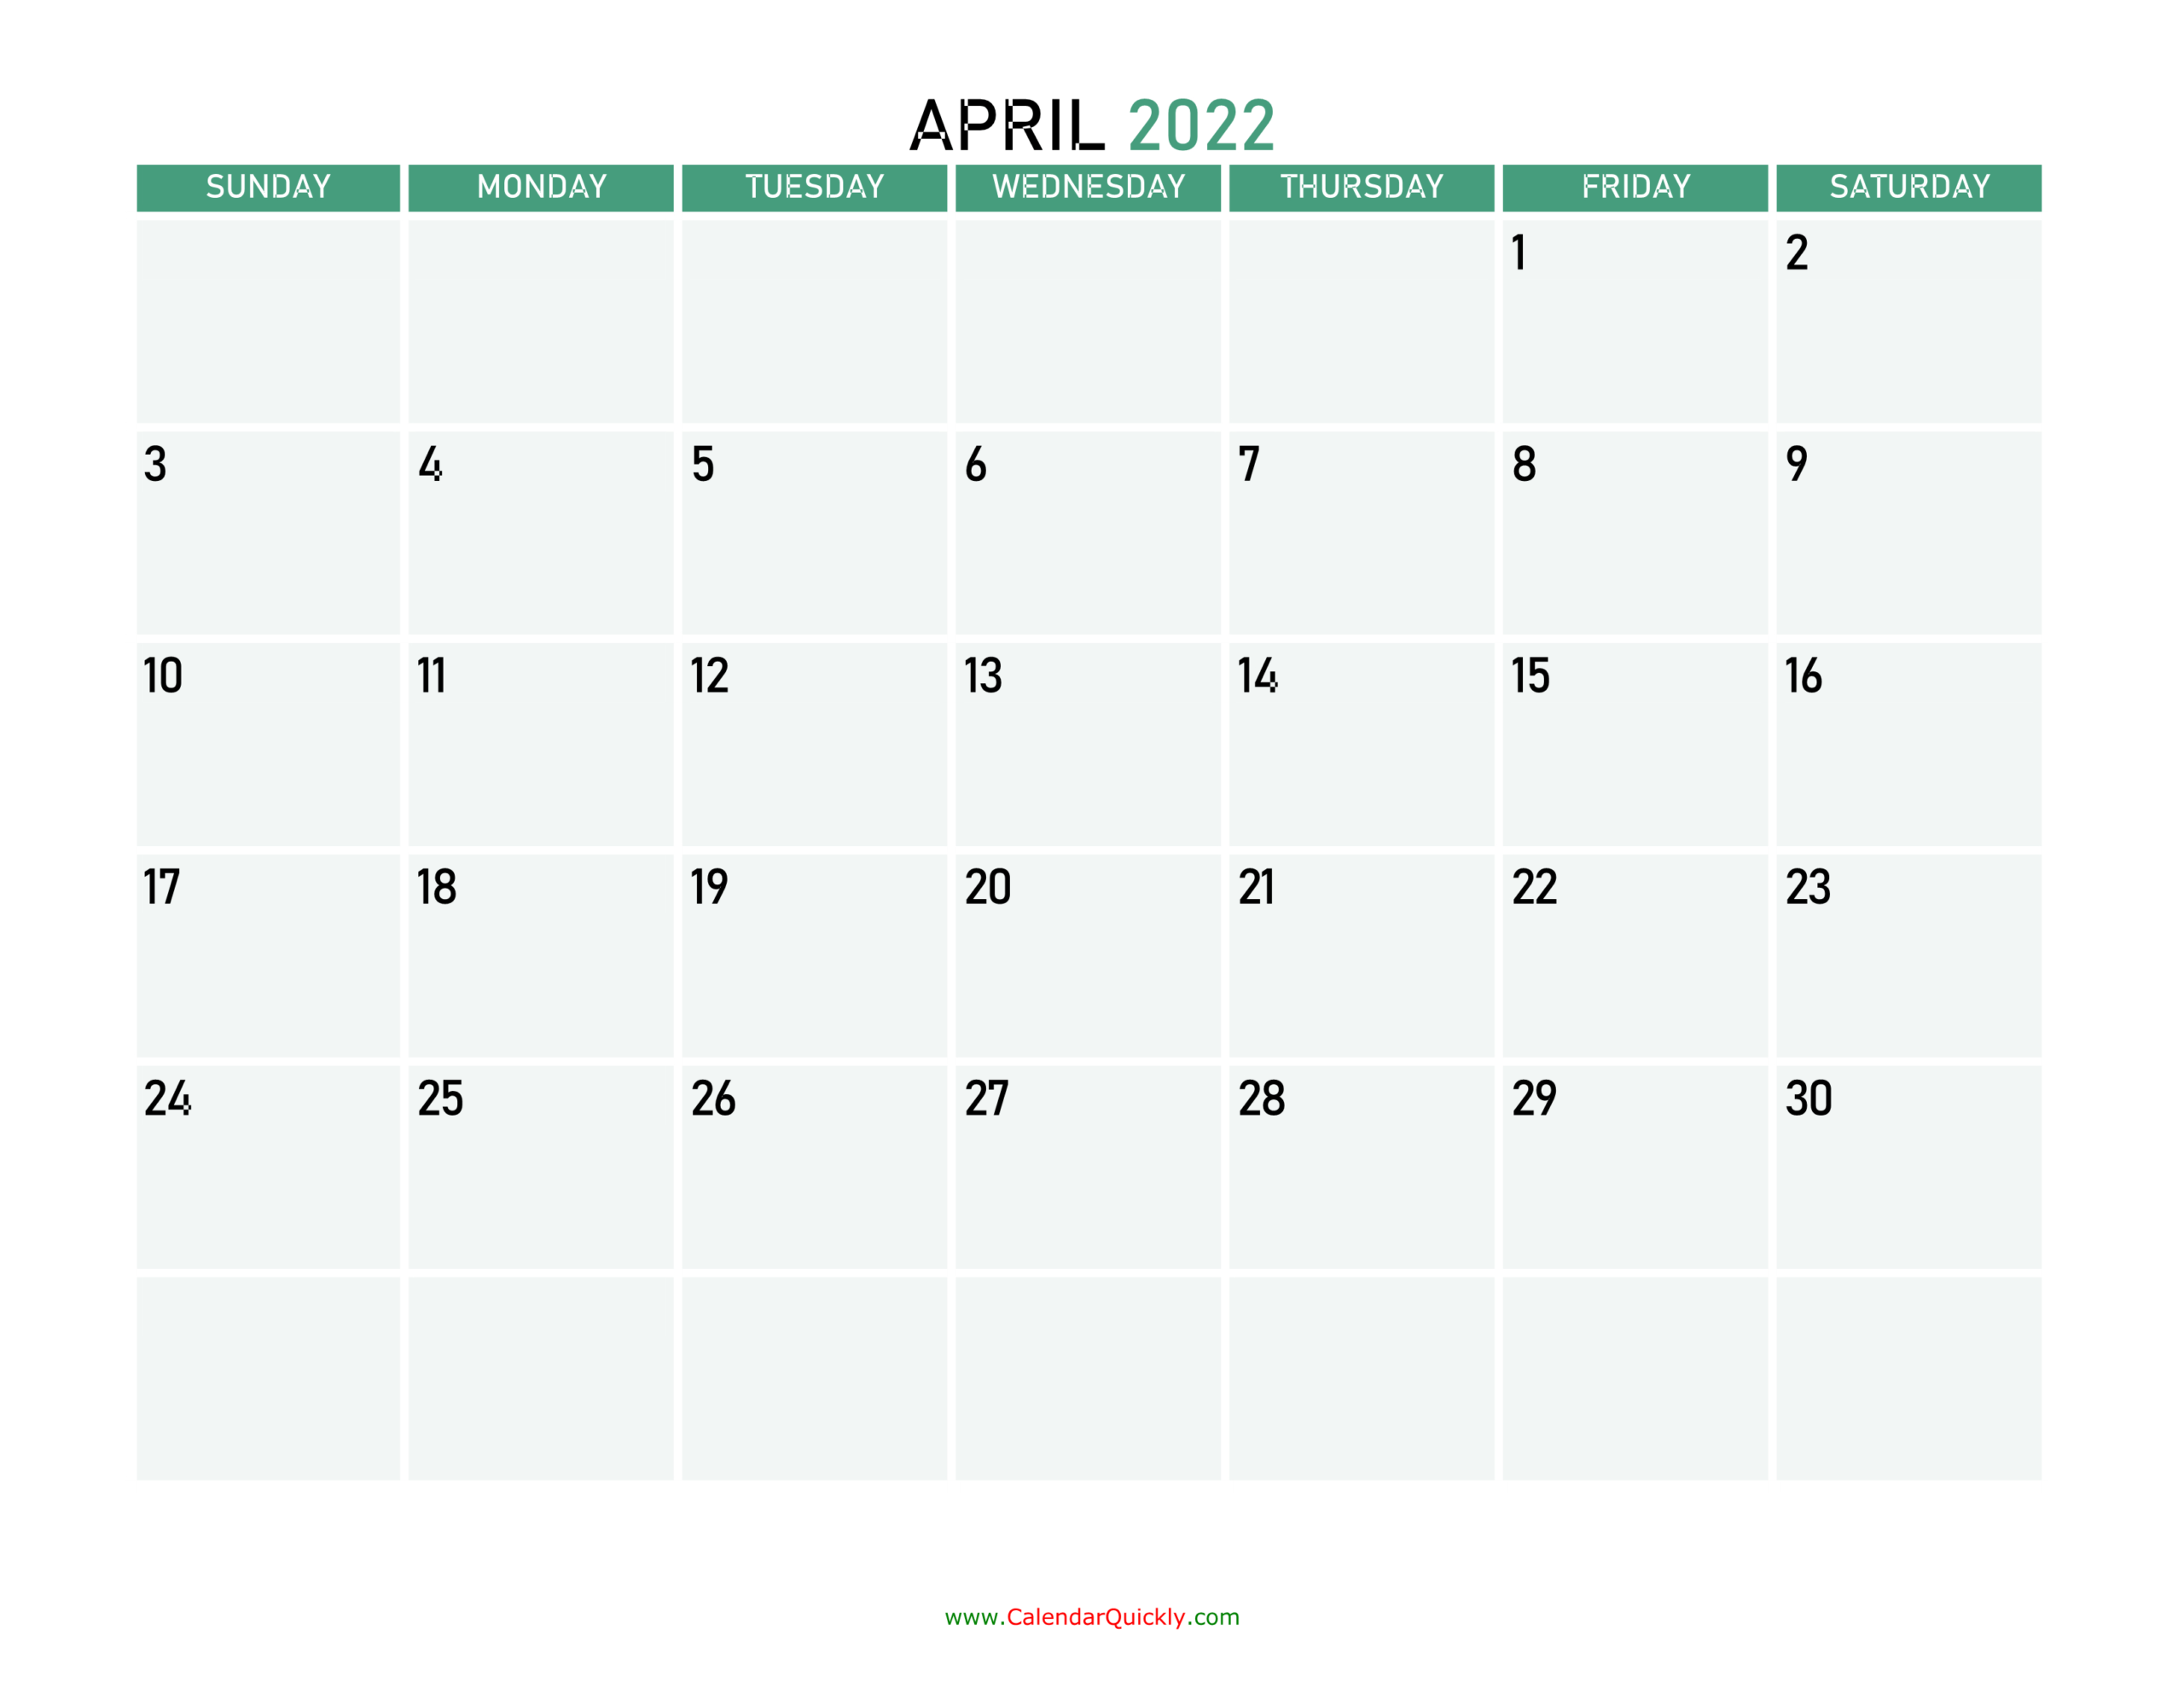 April 2022 Calendars | Calendar Quickly  Printable April 2022 To March 2022 Calendar